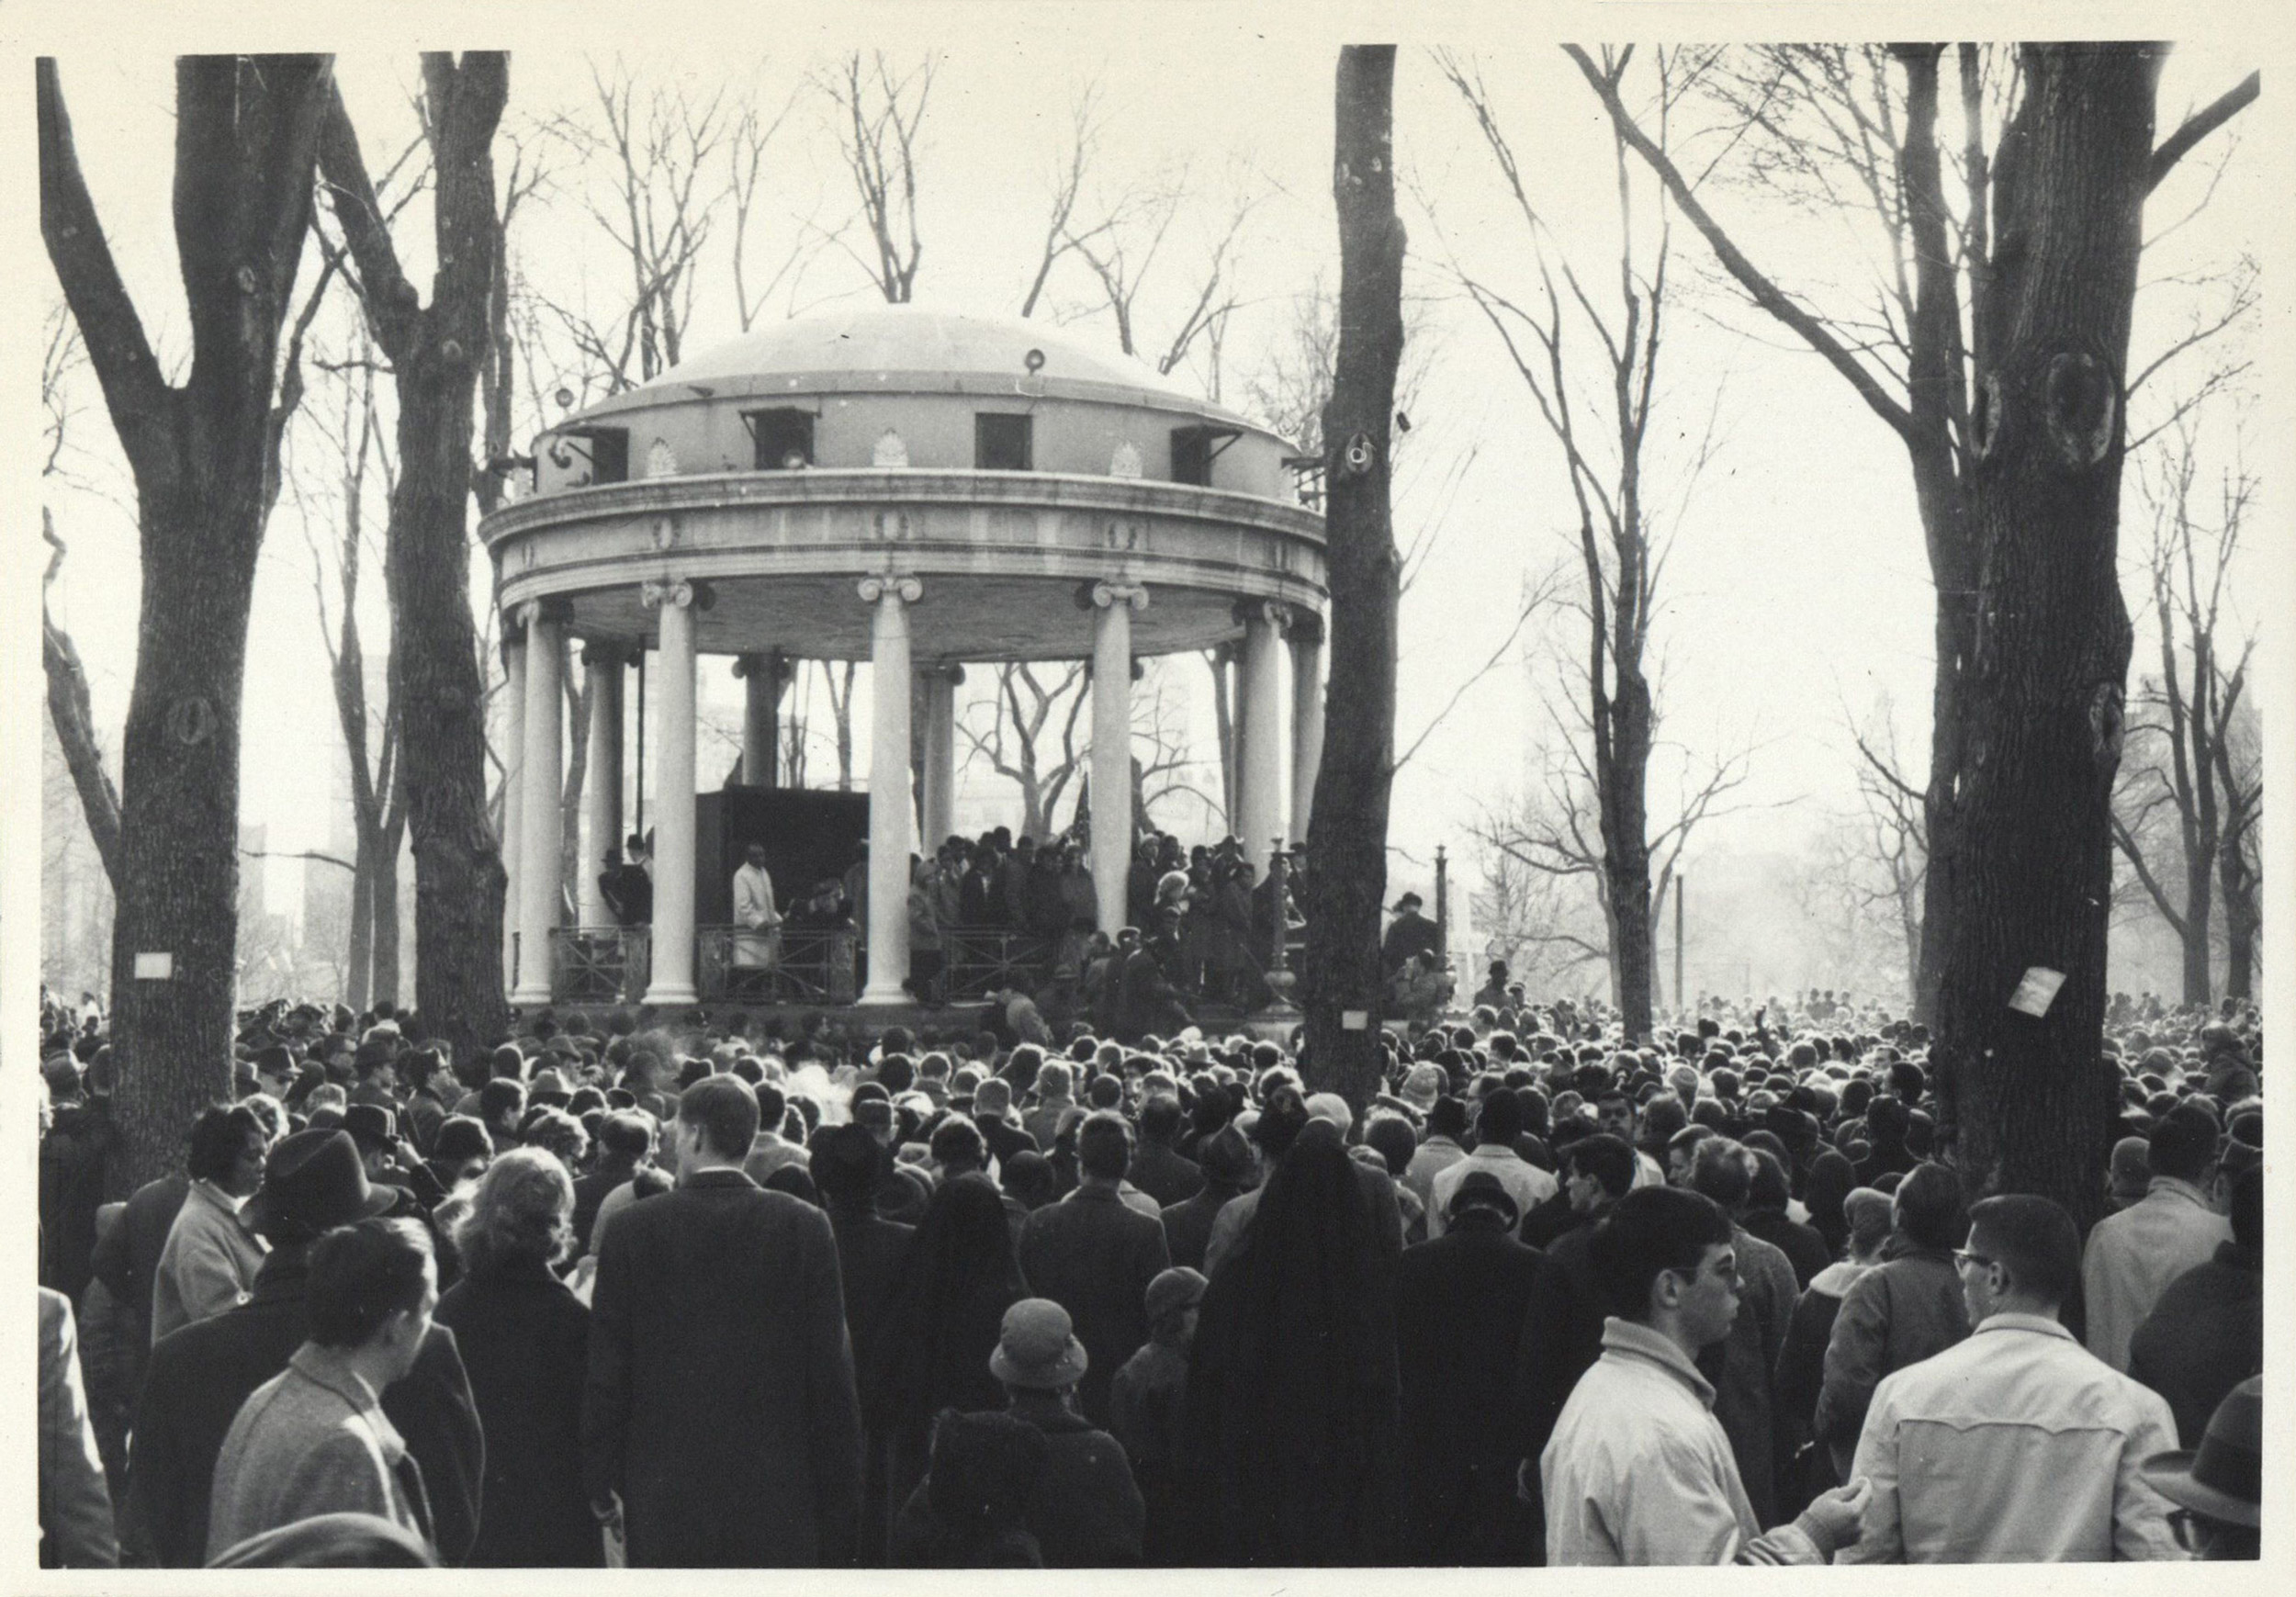 Civil rights protesters gather around the gazebo in Boston Common in 1965.